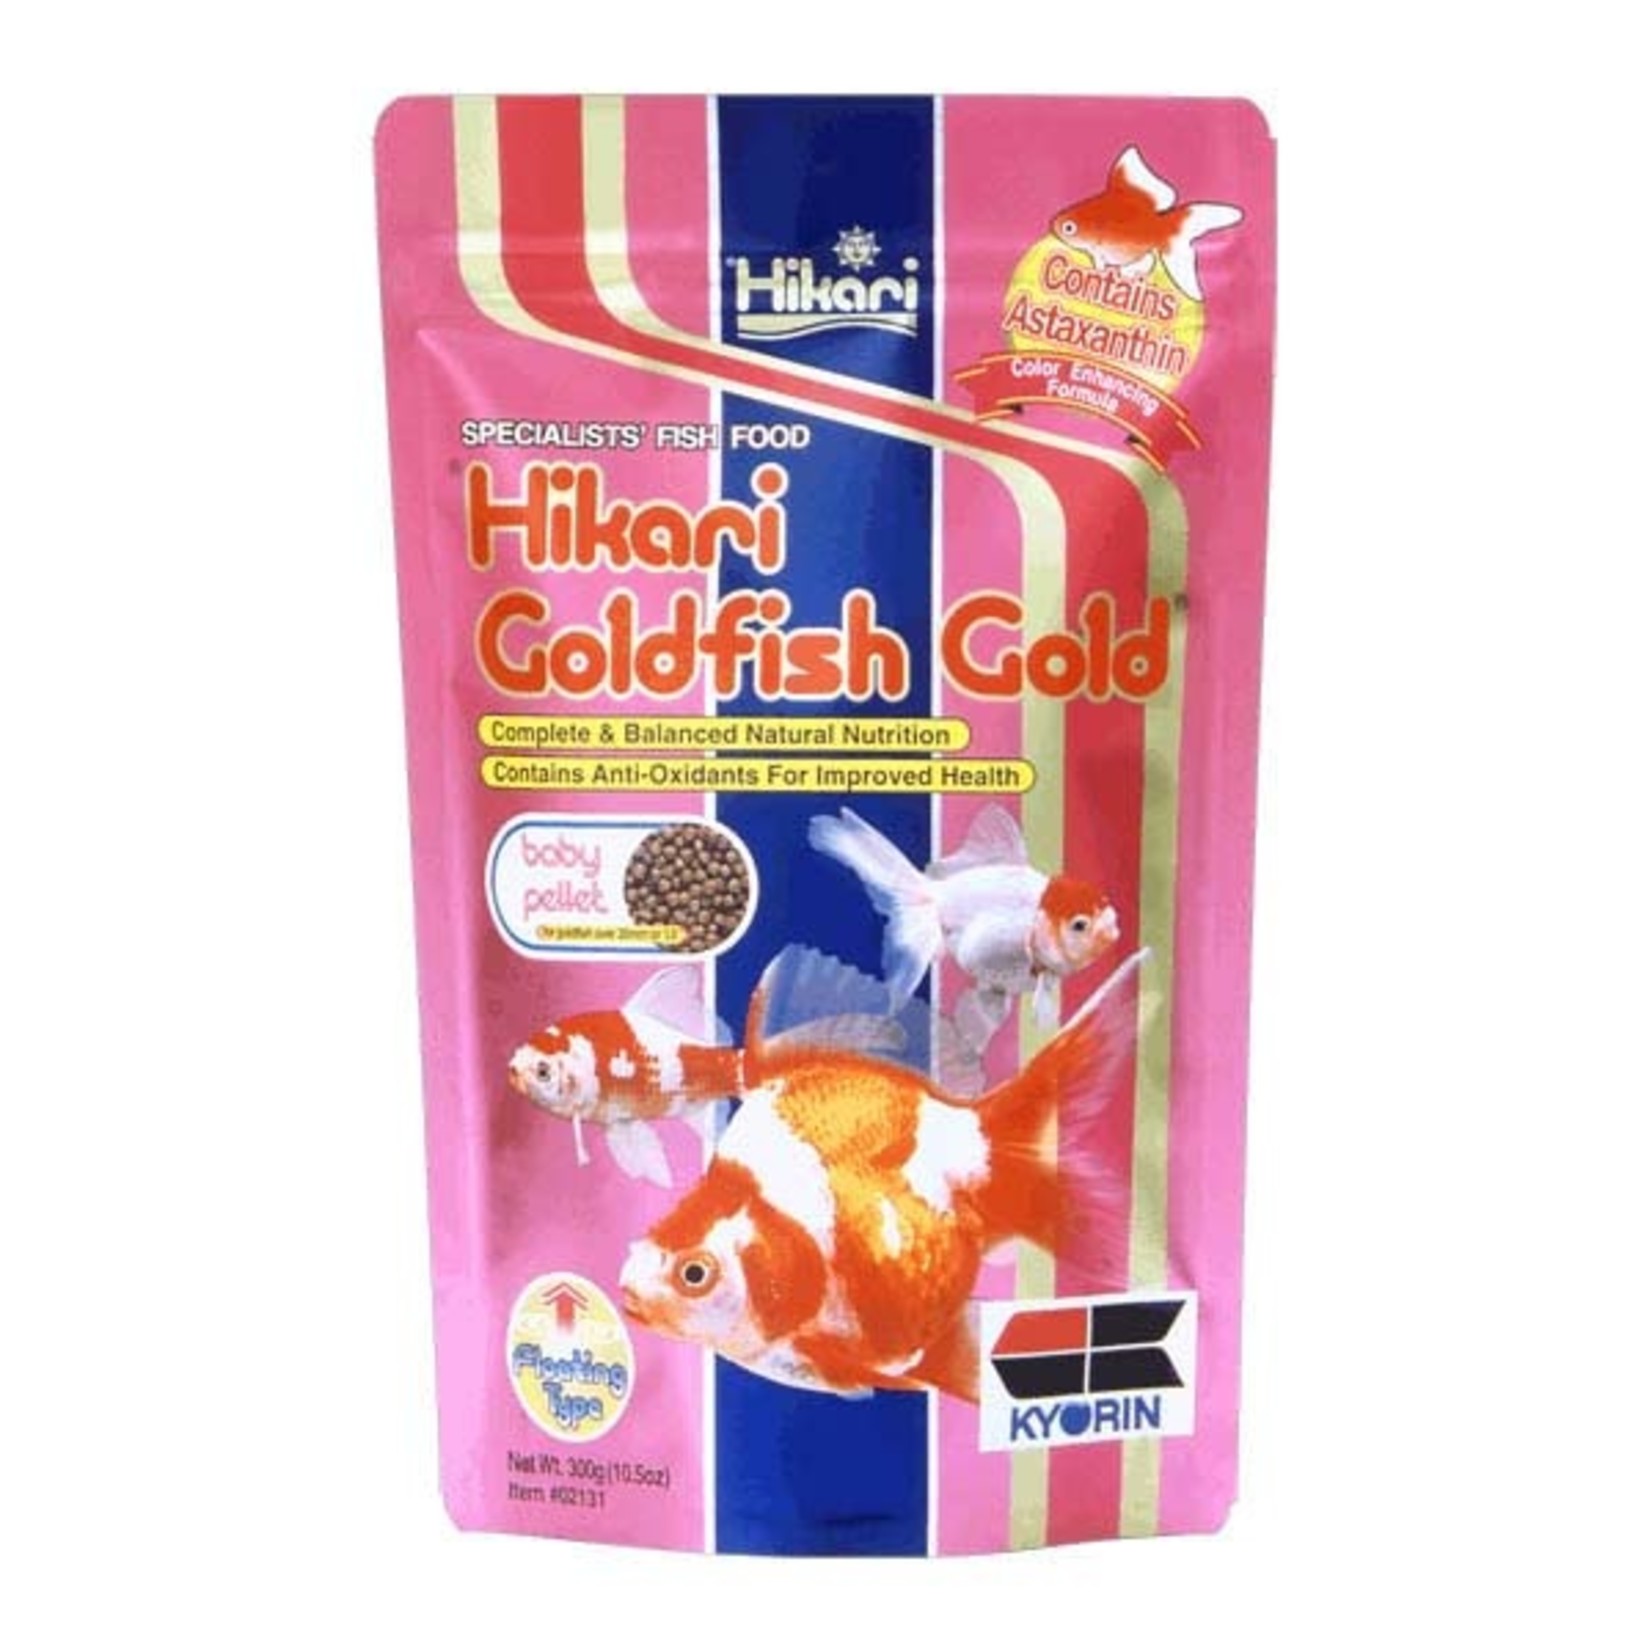 HIKARI (West only) Goldfish Gold Baby Pellets - 3.5oz